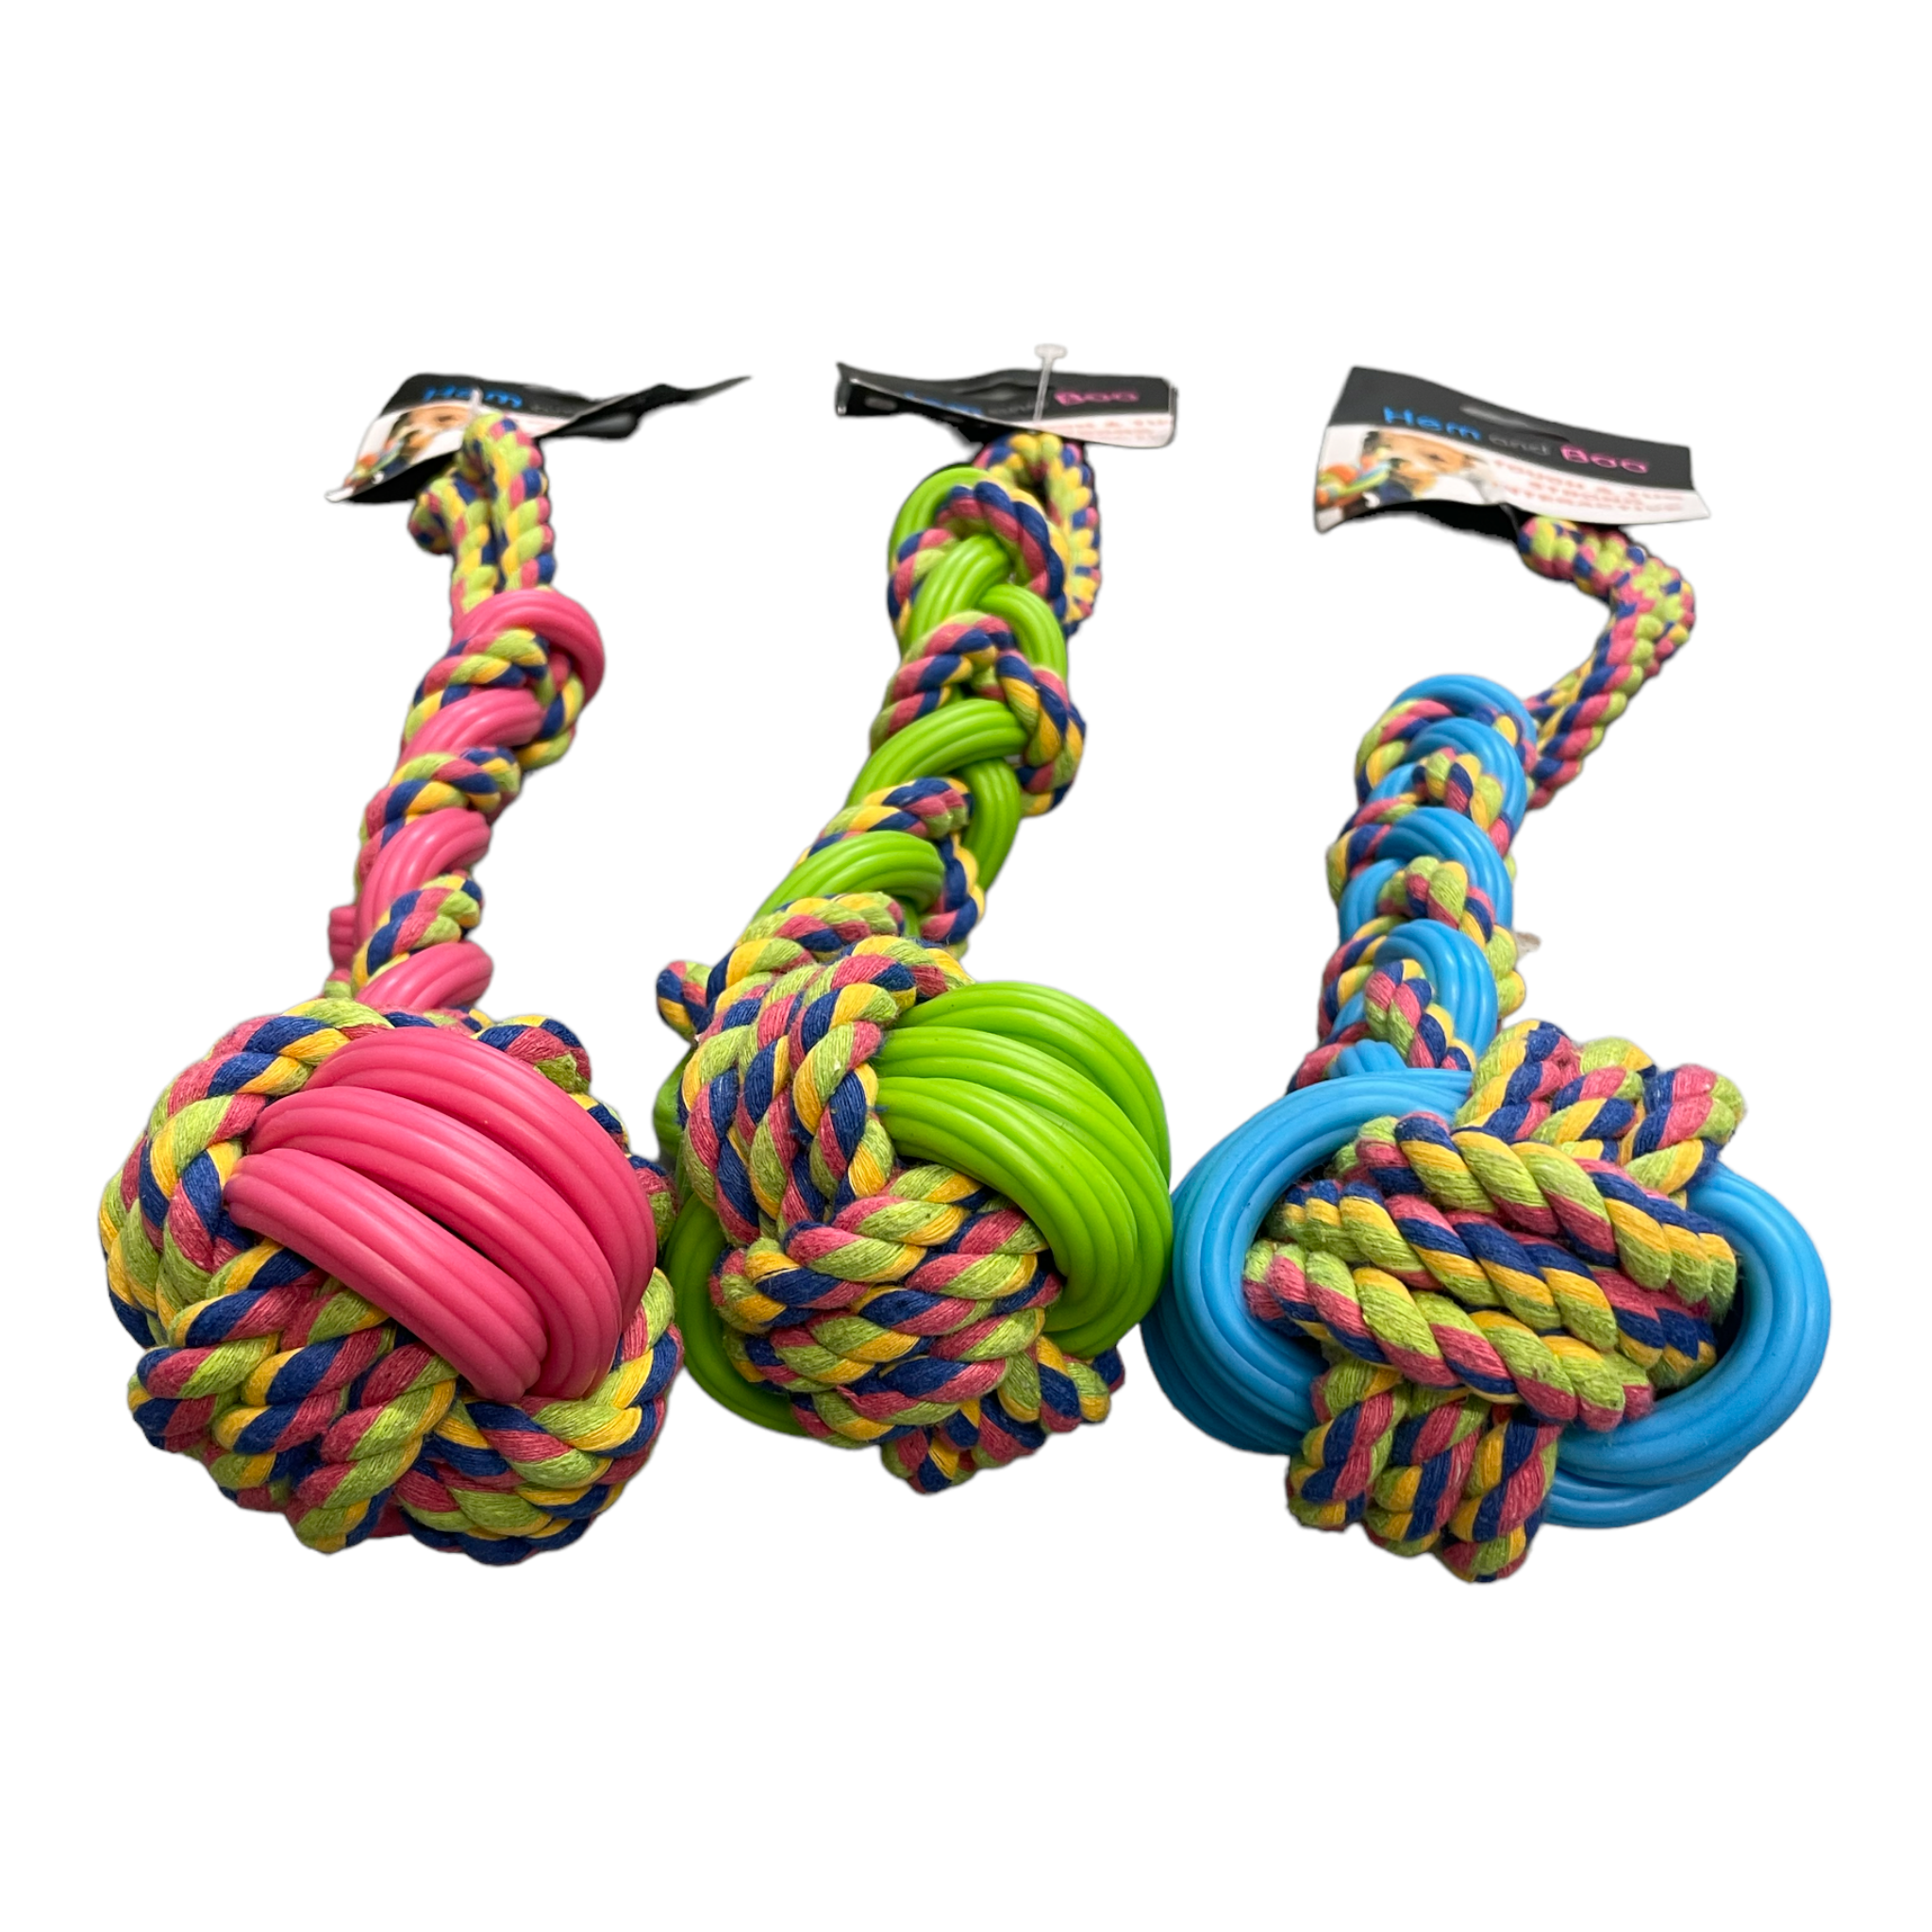 Hem & Boo TPR/Rope Interwoven Ball Toy